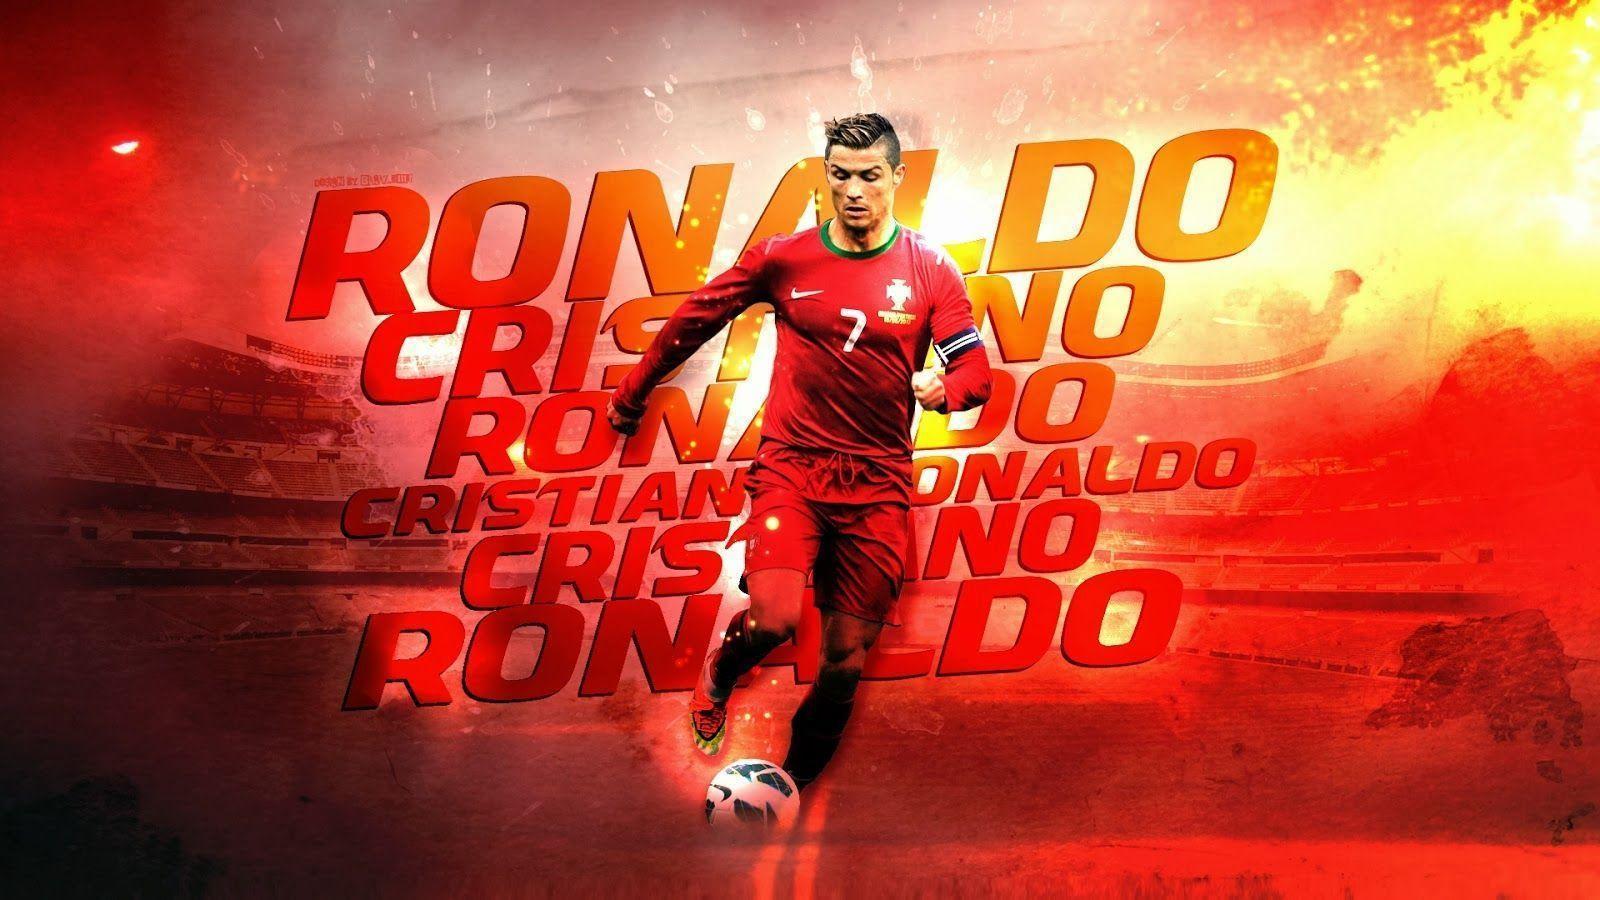 Cristiano Ronaldo New HD Wallpaper 2014 2015. Football Wallpaper HD